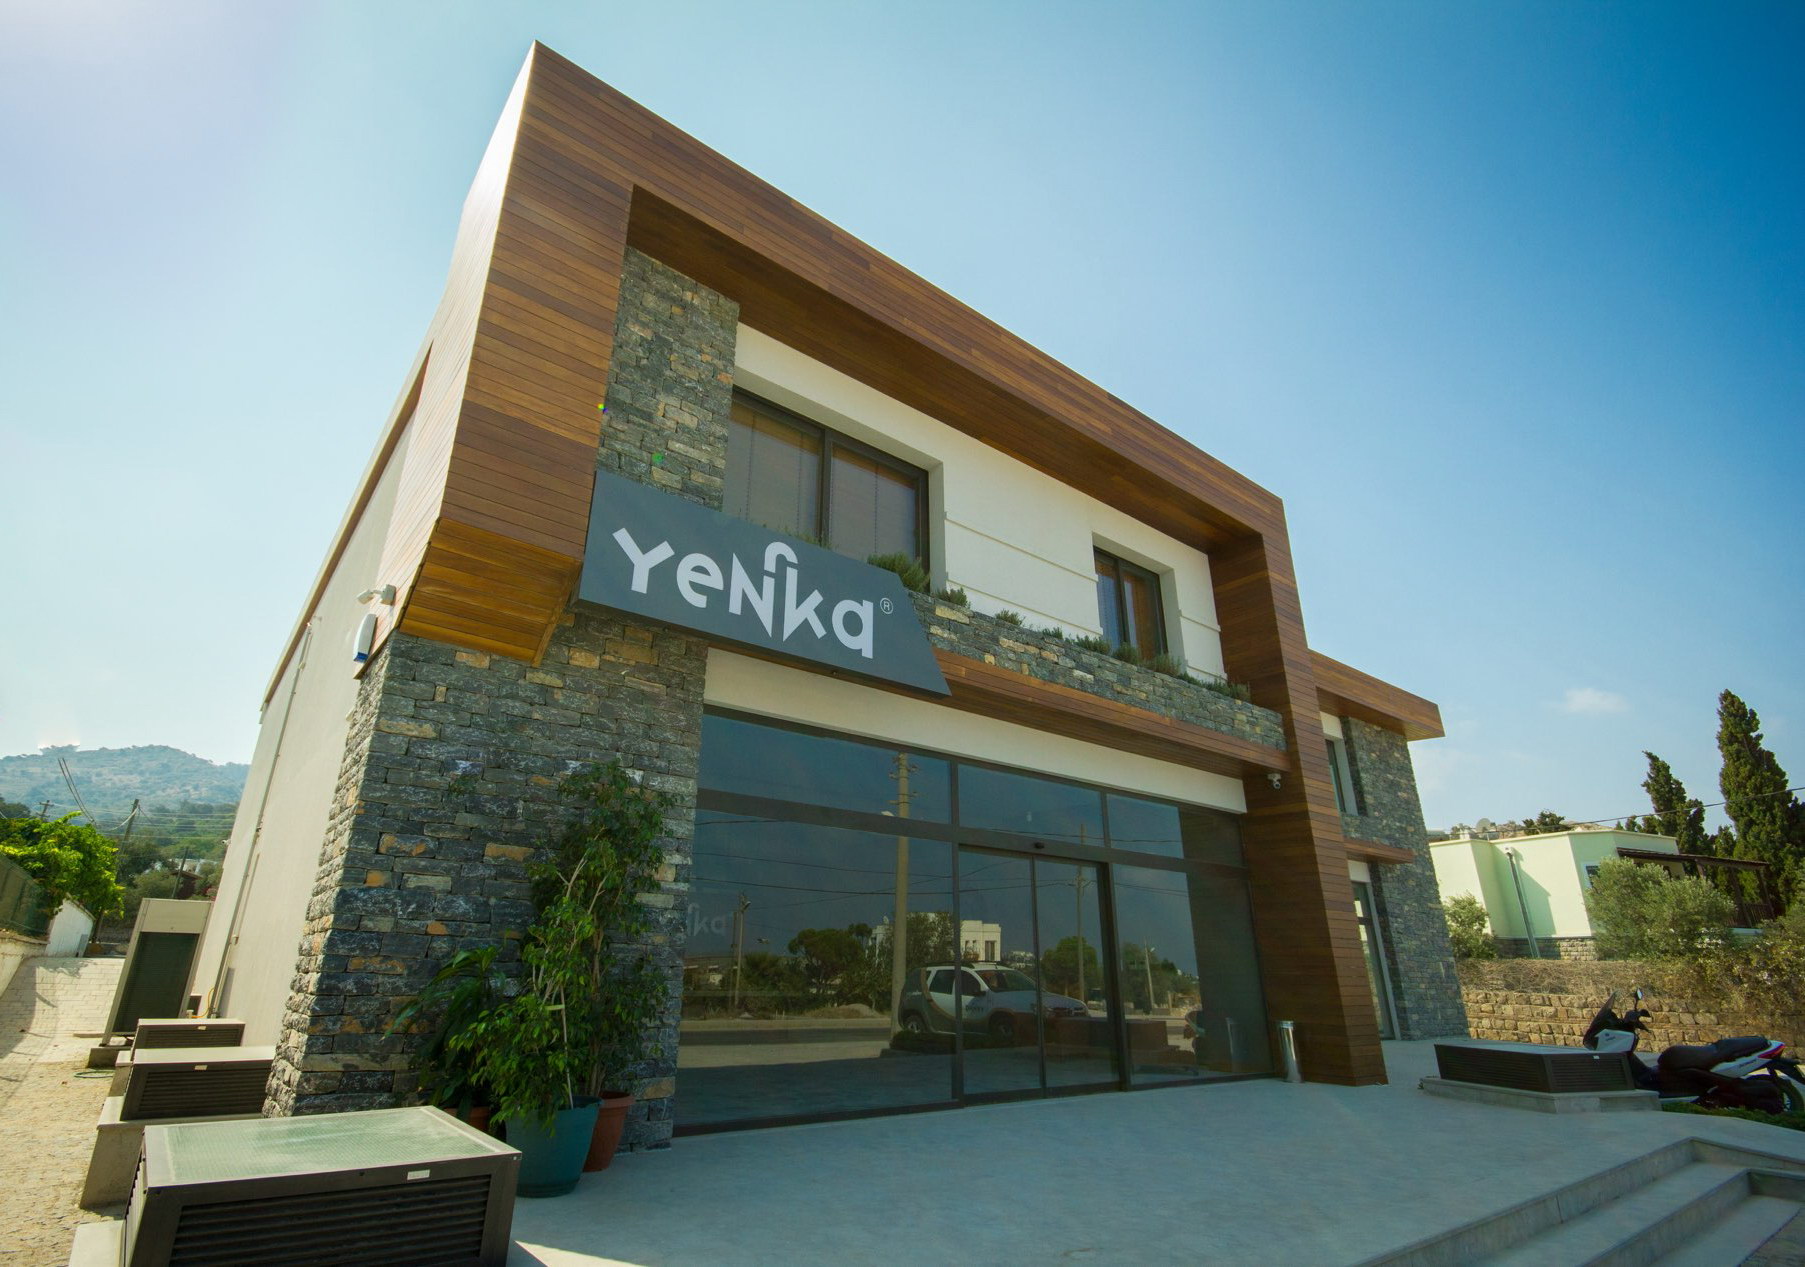 Yenka office building - 2016